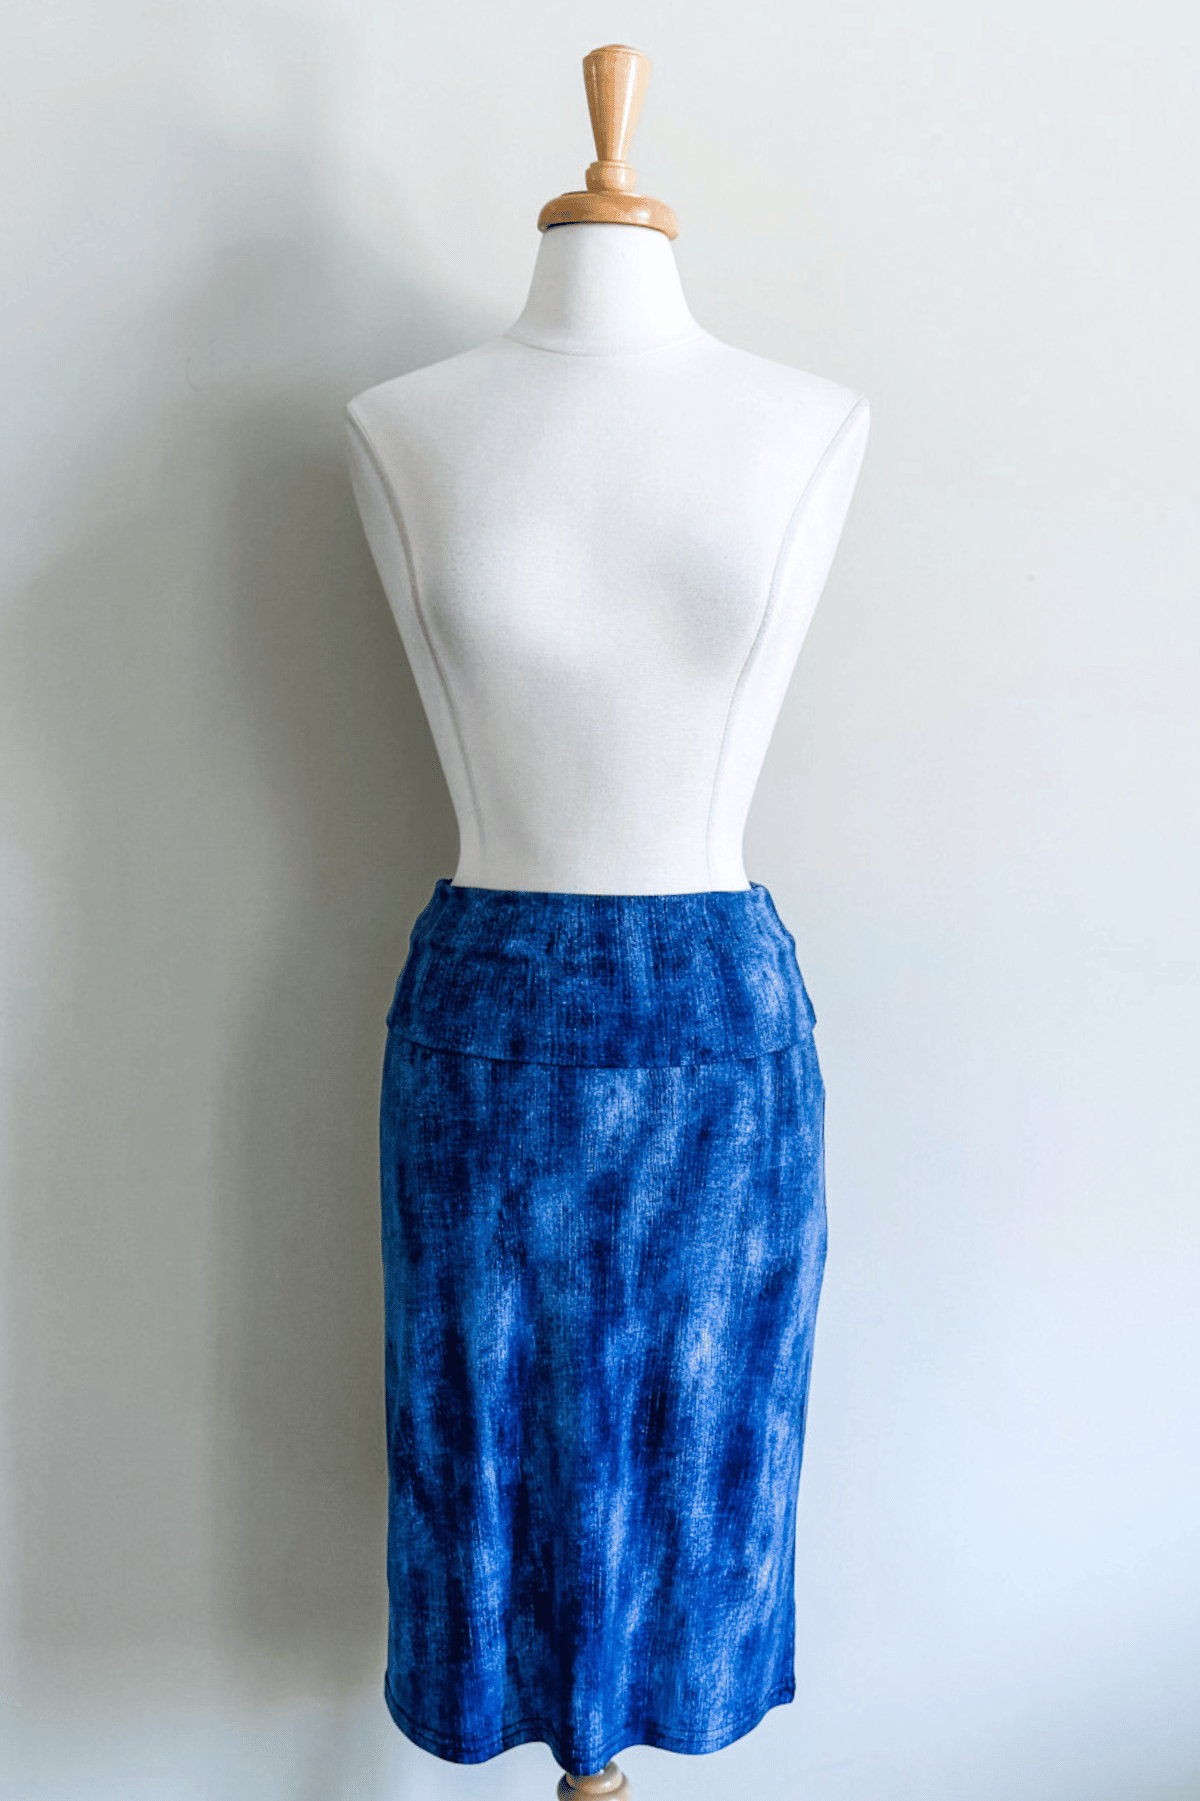 Slip Skirt in Indigo Distressed print